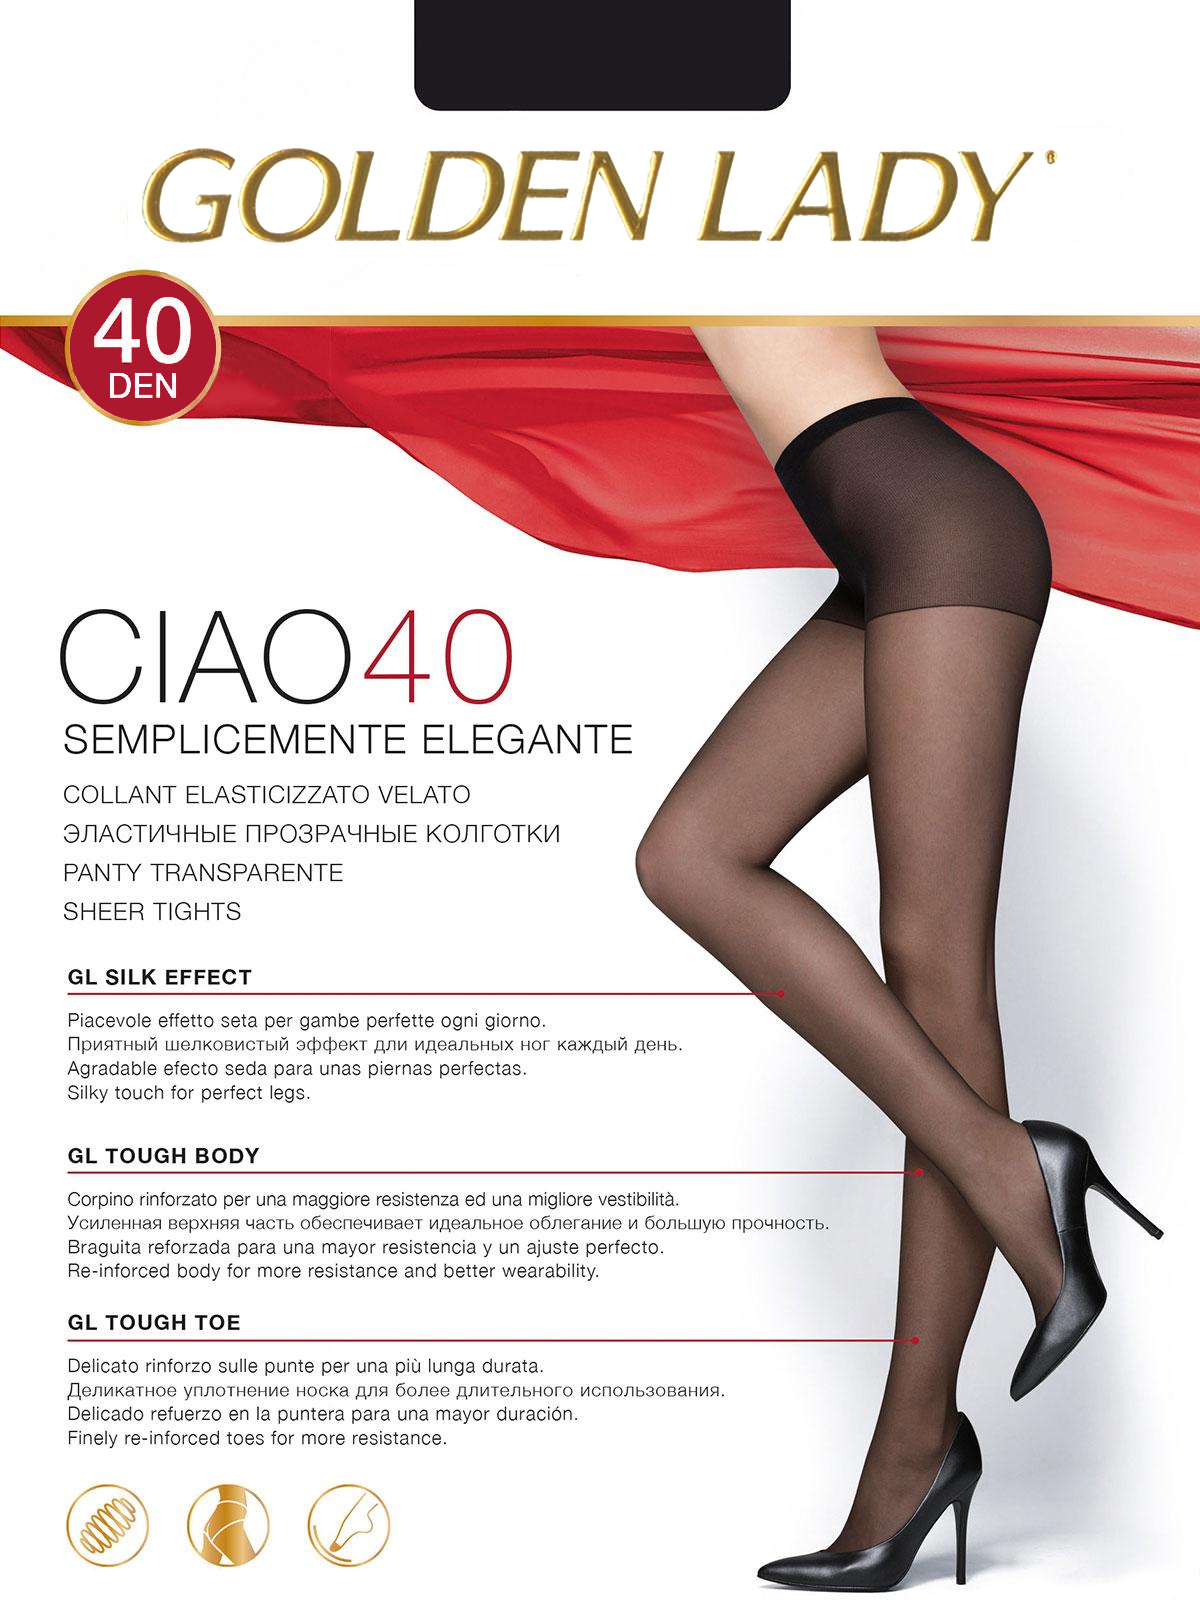 Golden Lady Ciao 40 от магазина Мир колготок и чулок